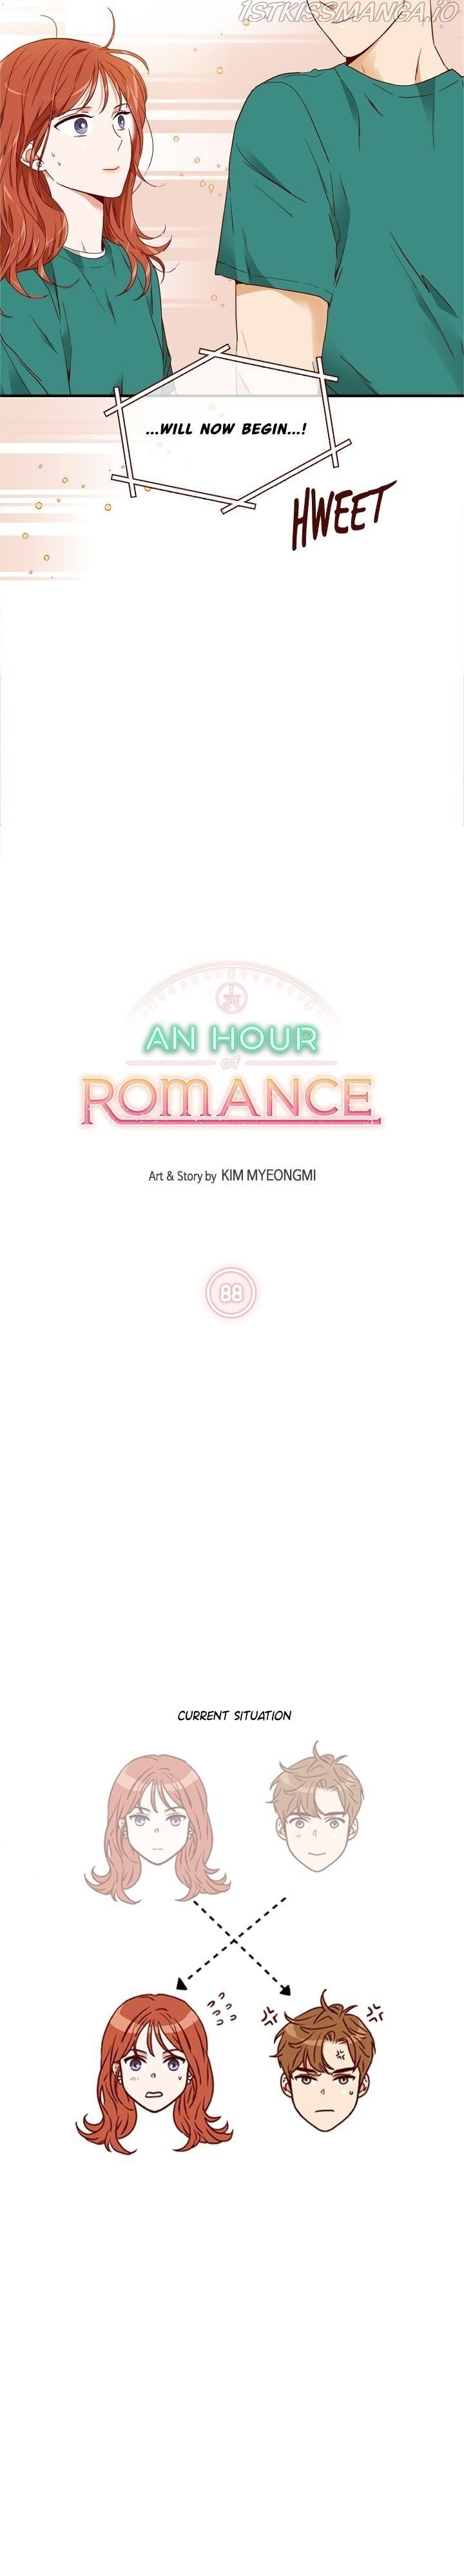 1/24 Romance Chapter 88 page 2